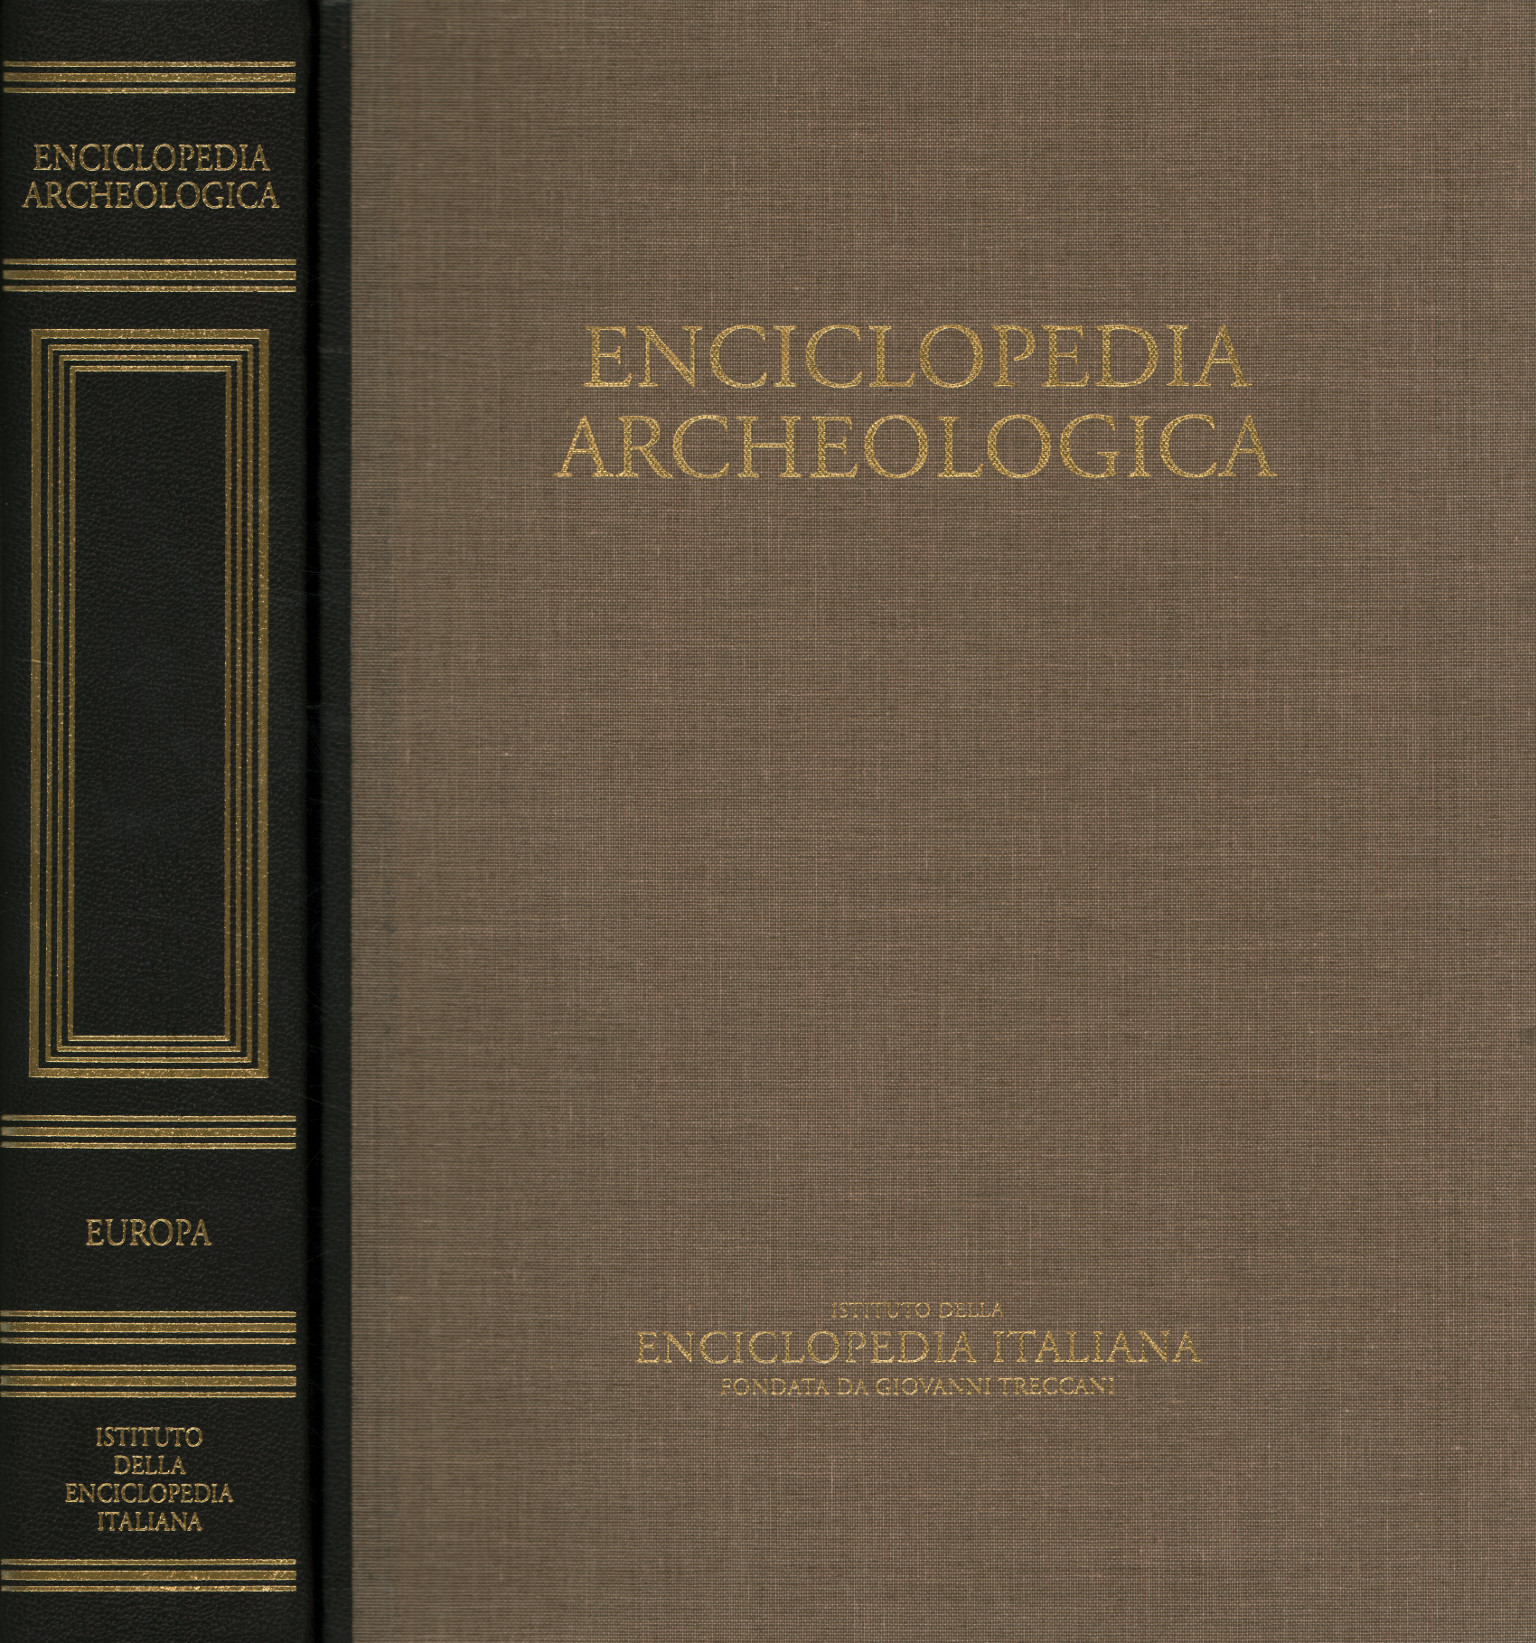 Archaeological encyclopedia. Europe